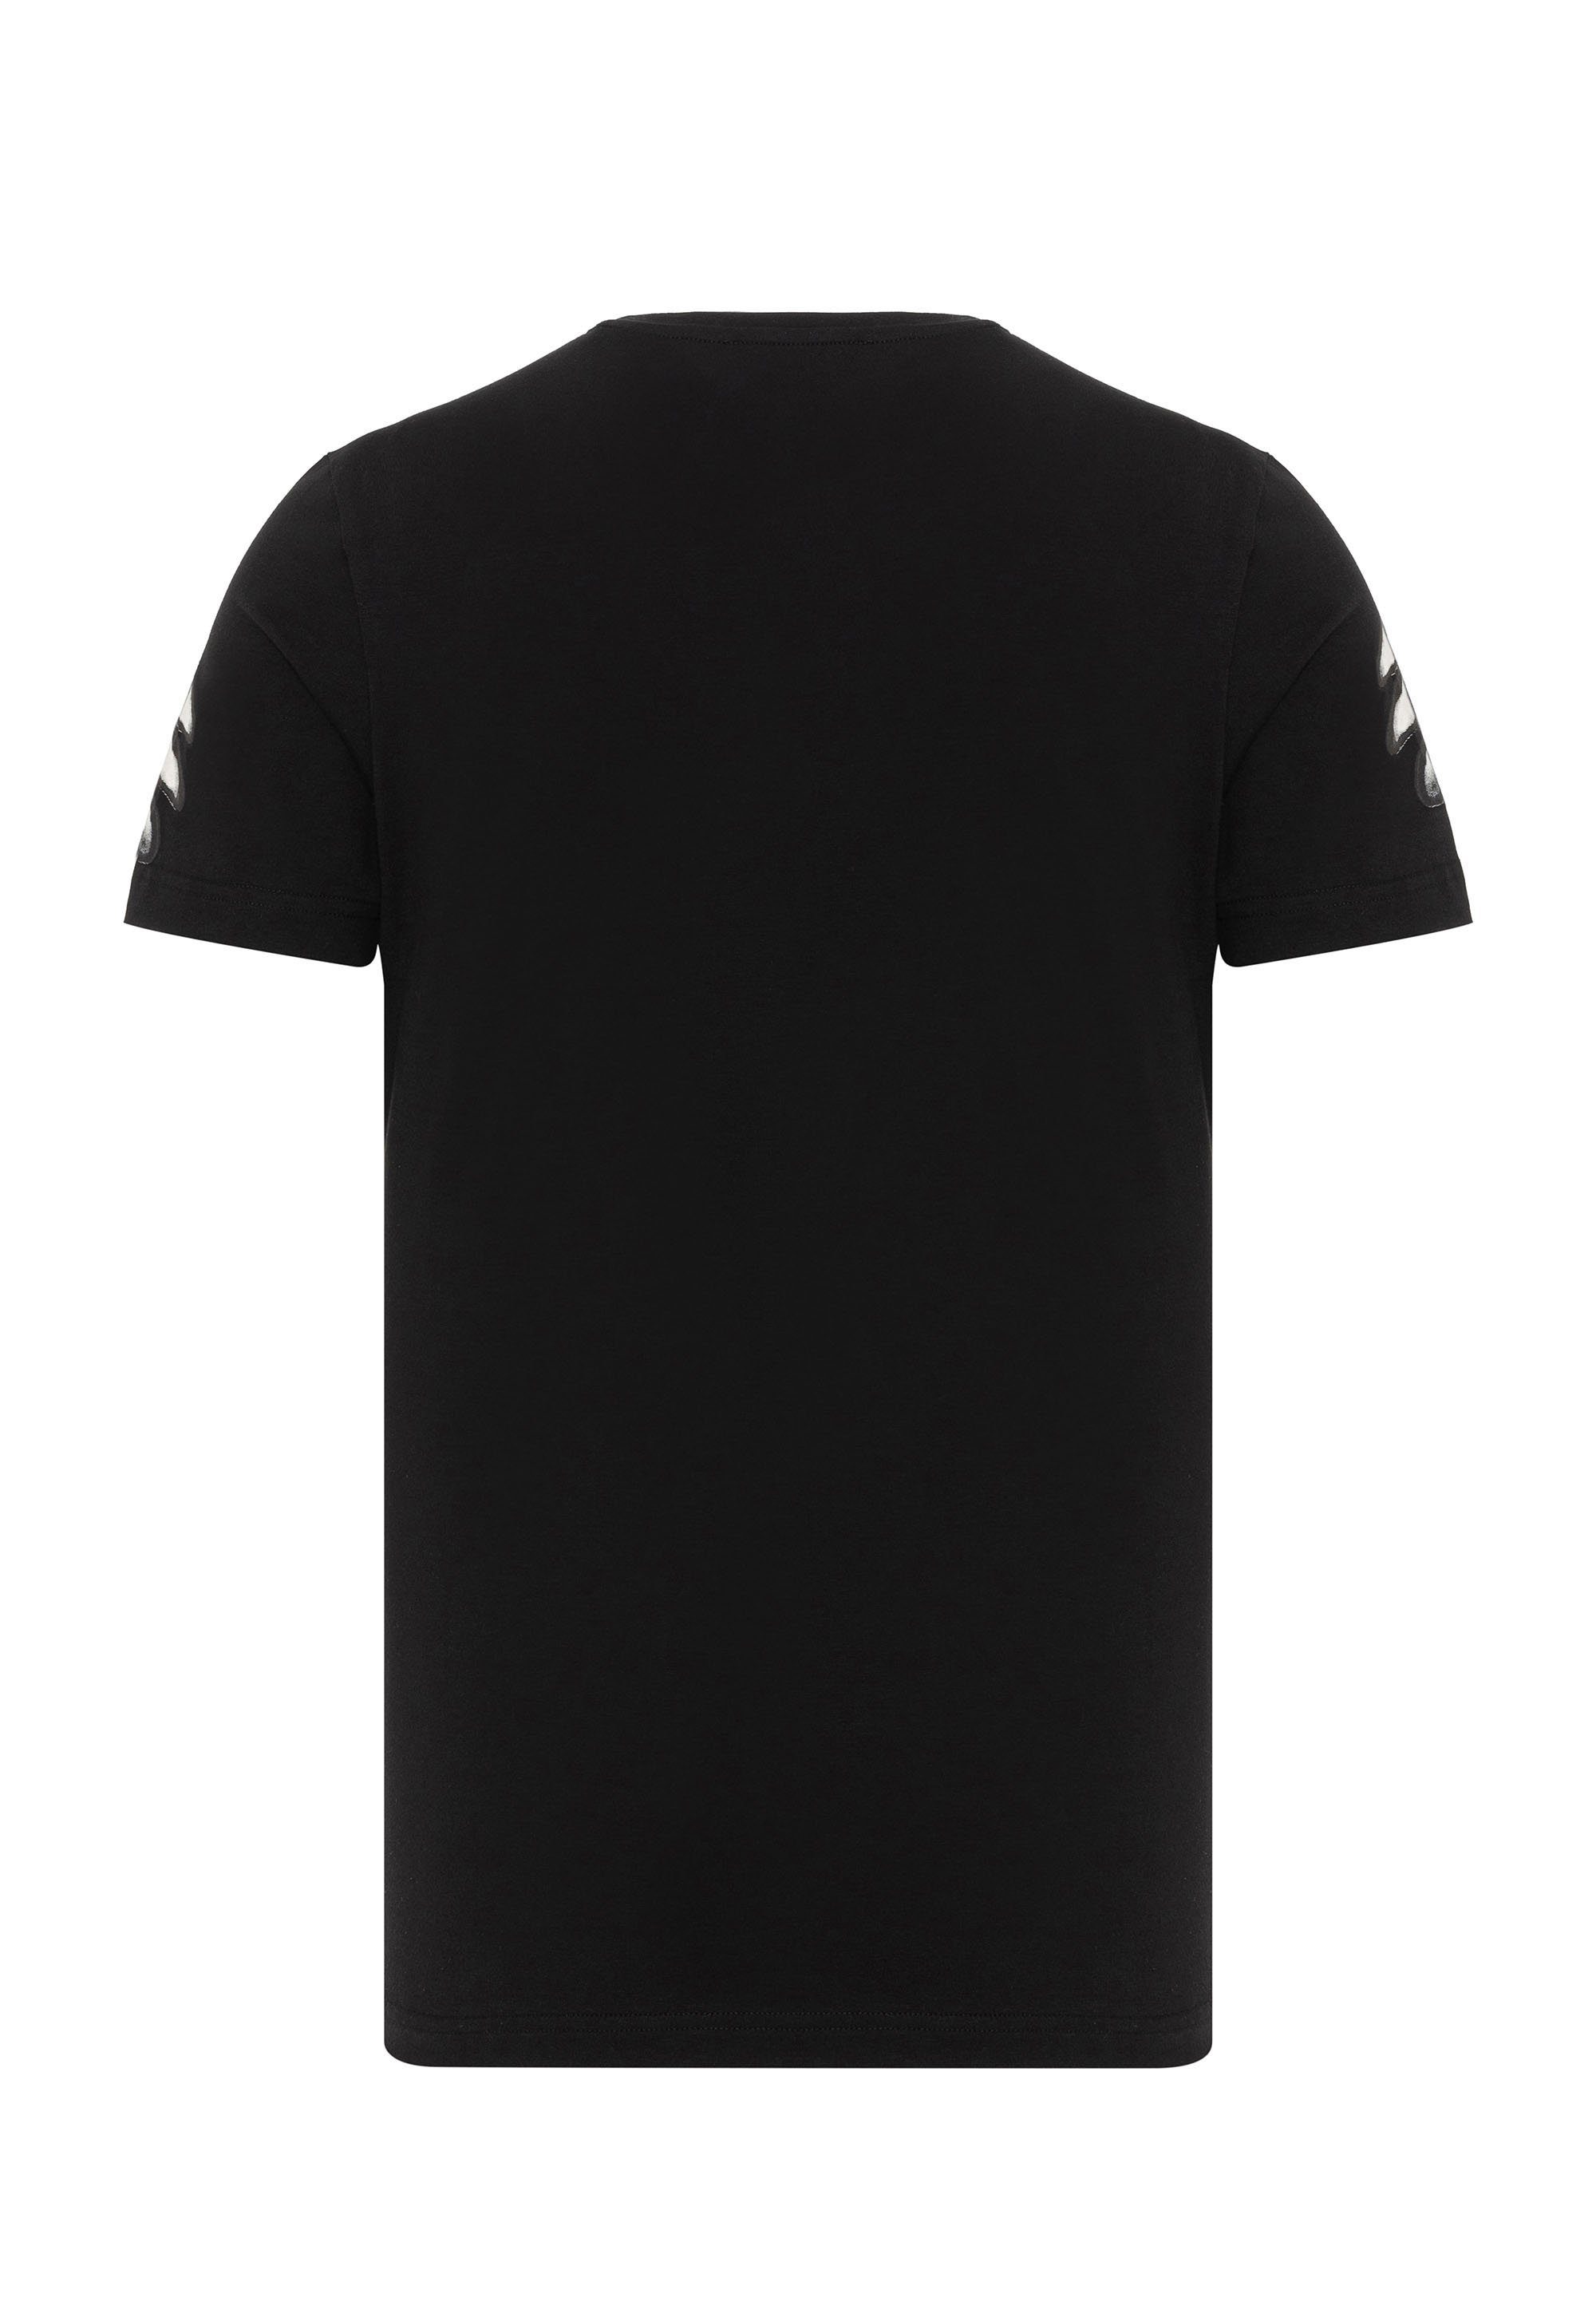 Cipo & Baxx Look schwarz in T-Shirt rockigem